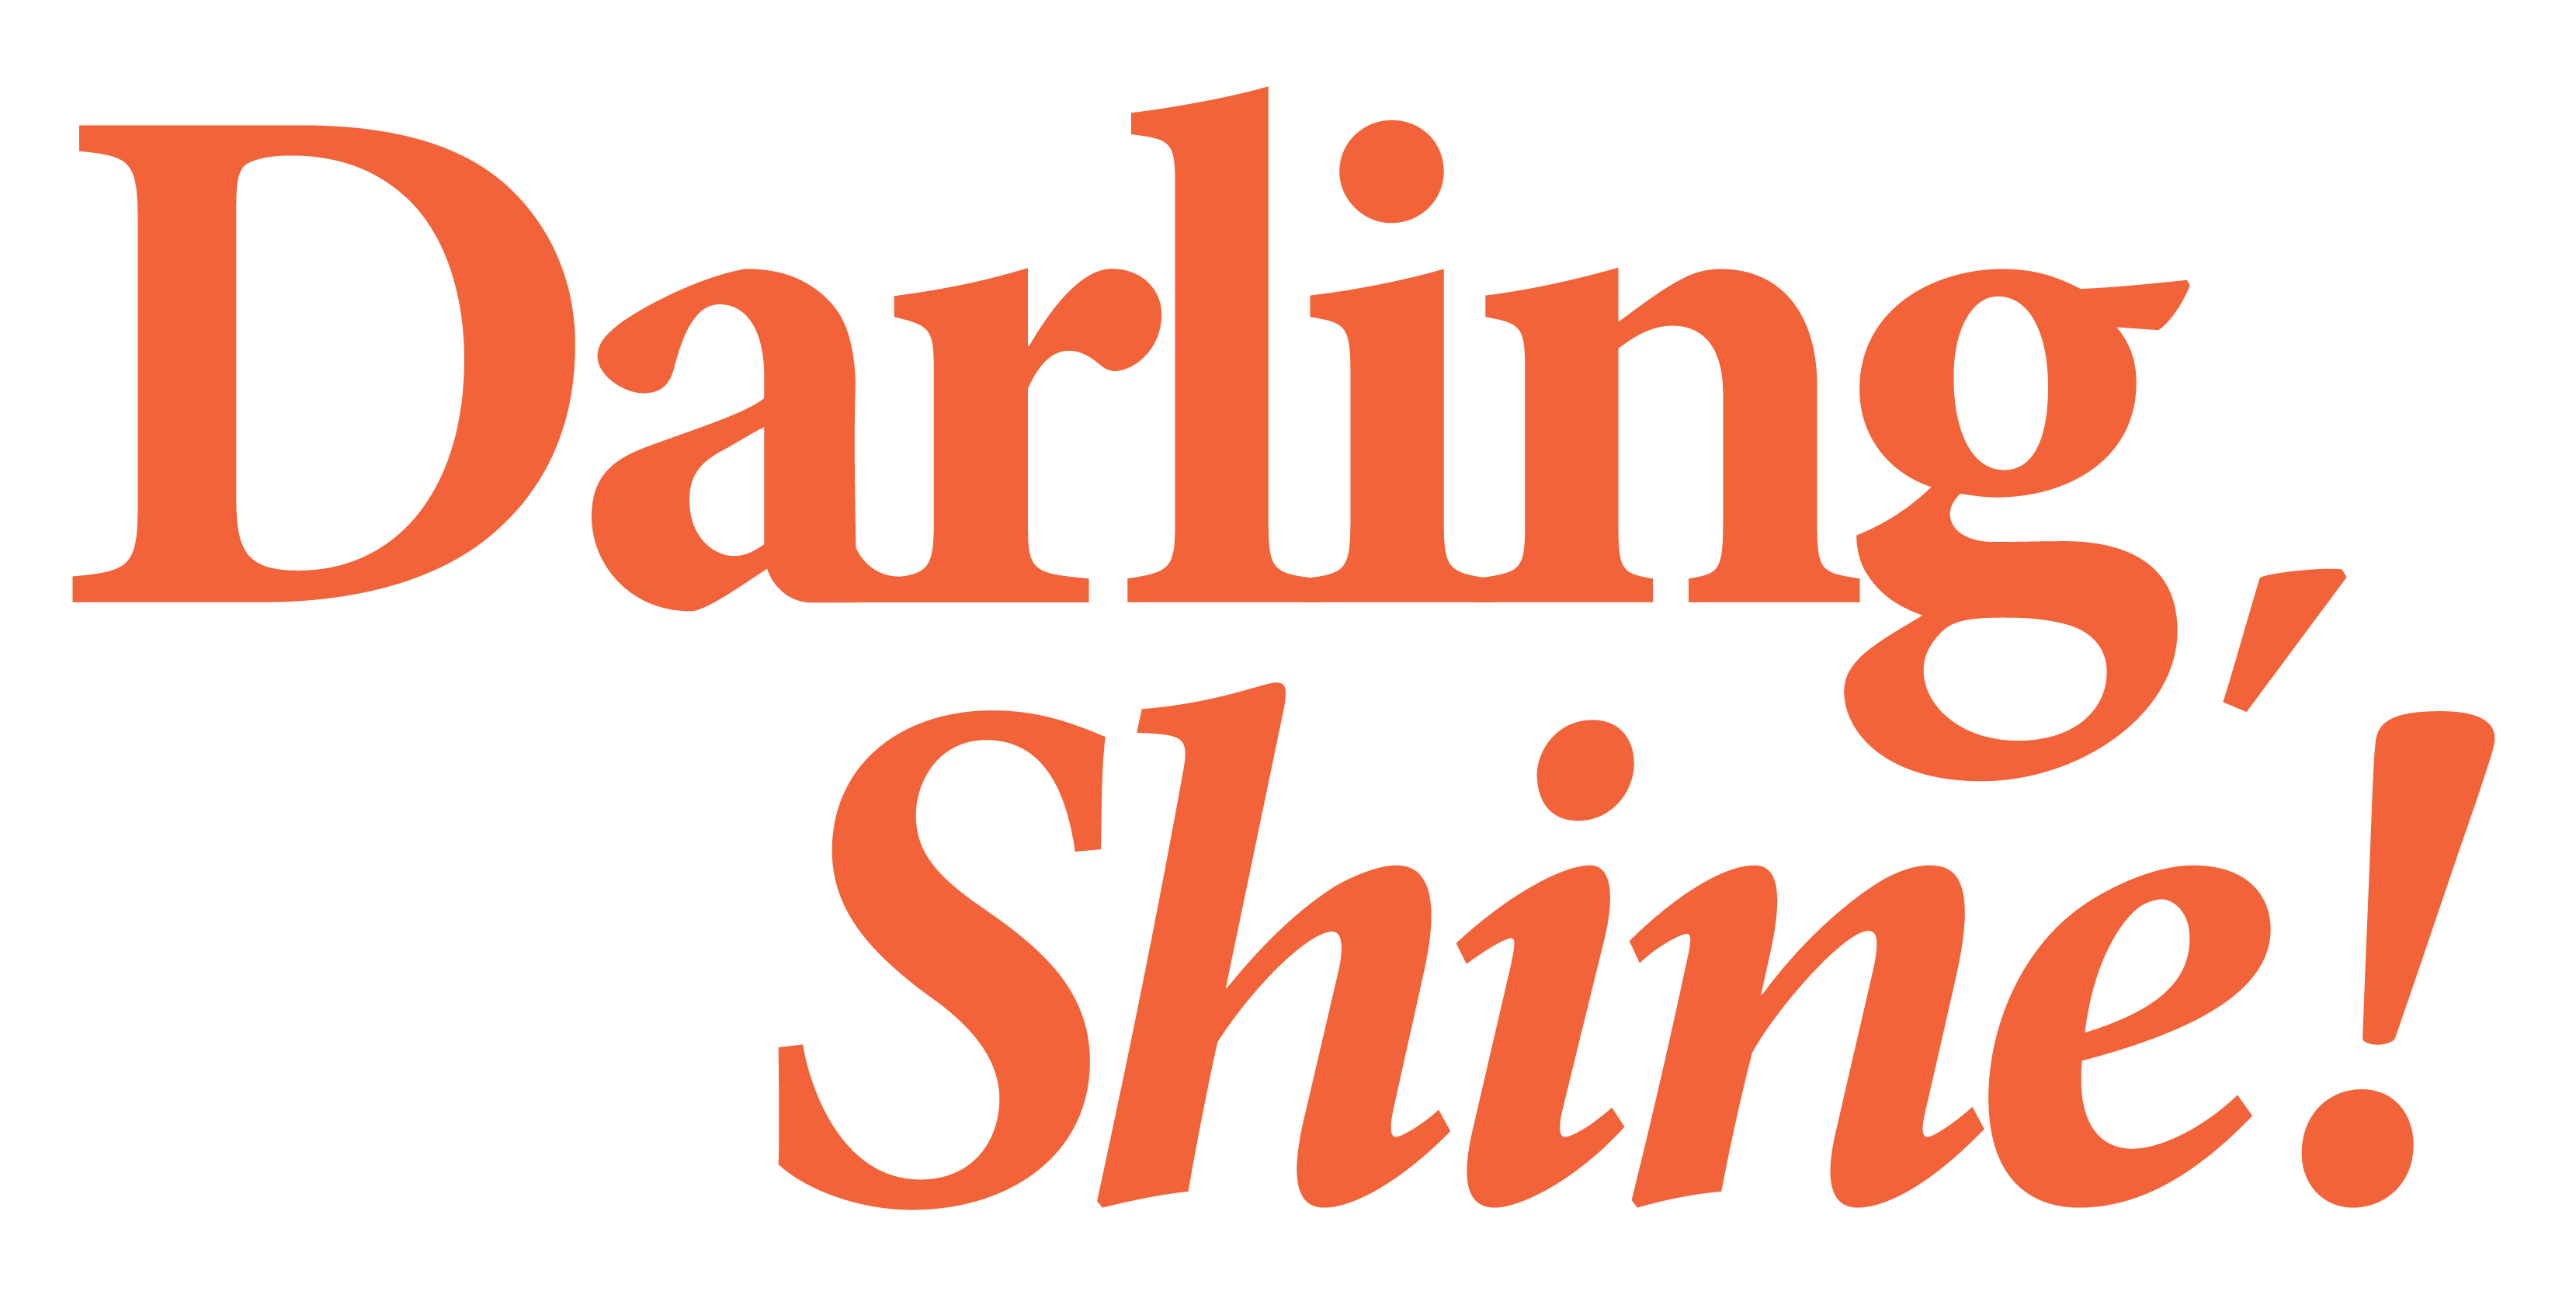 Darling, Shine!